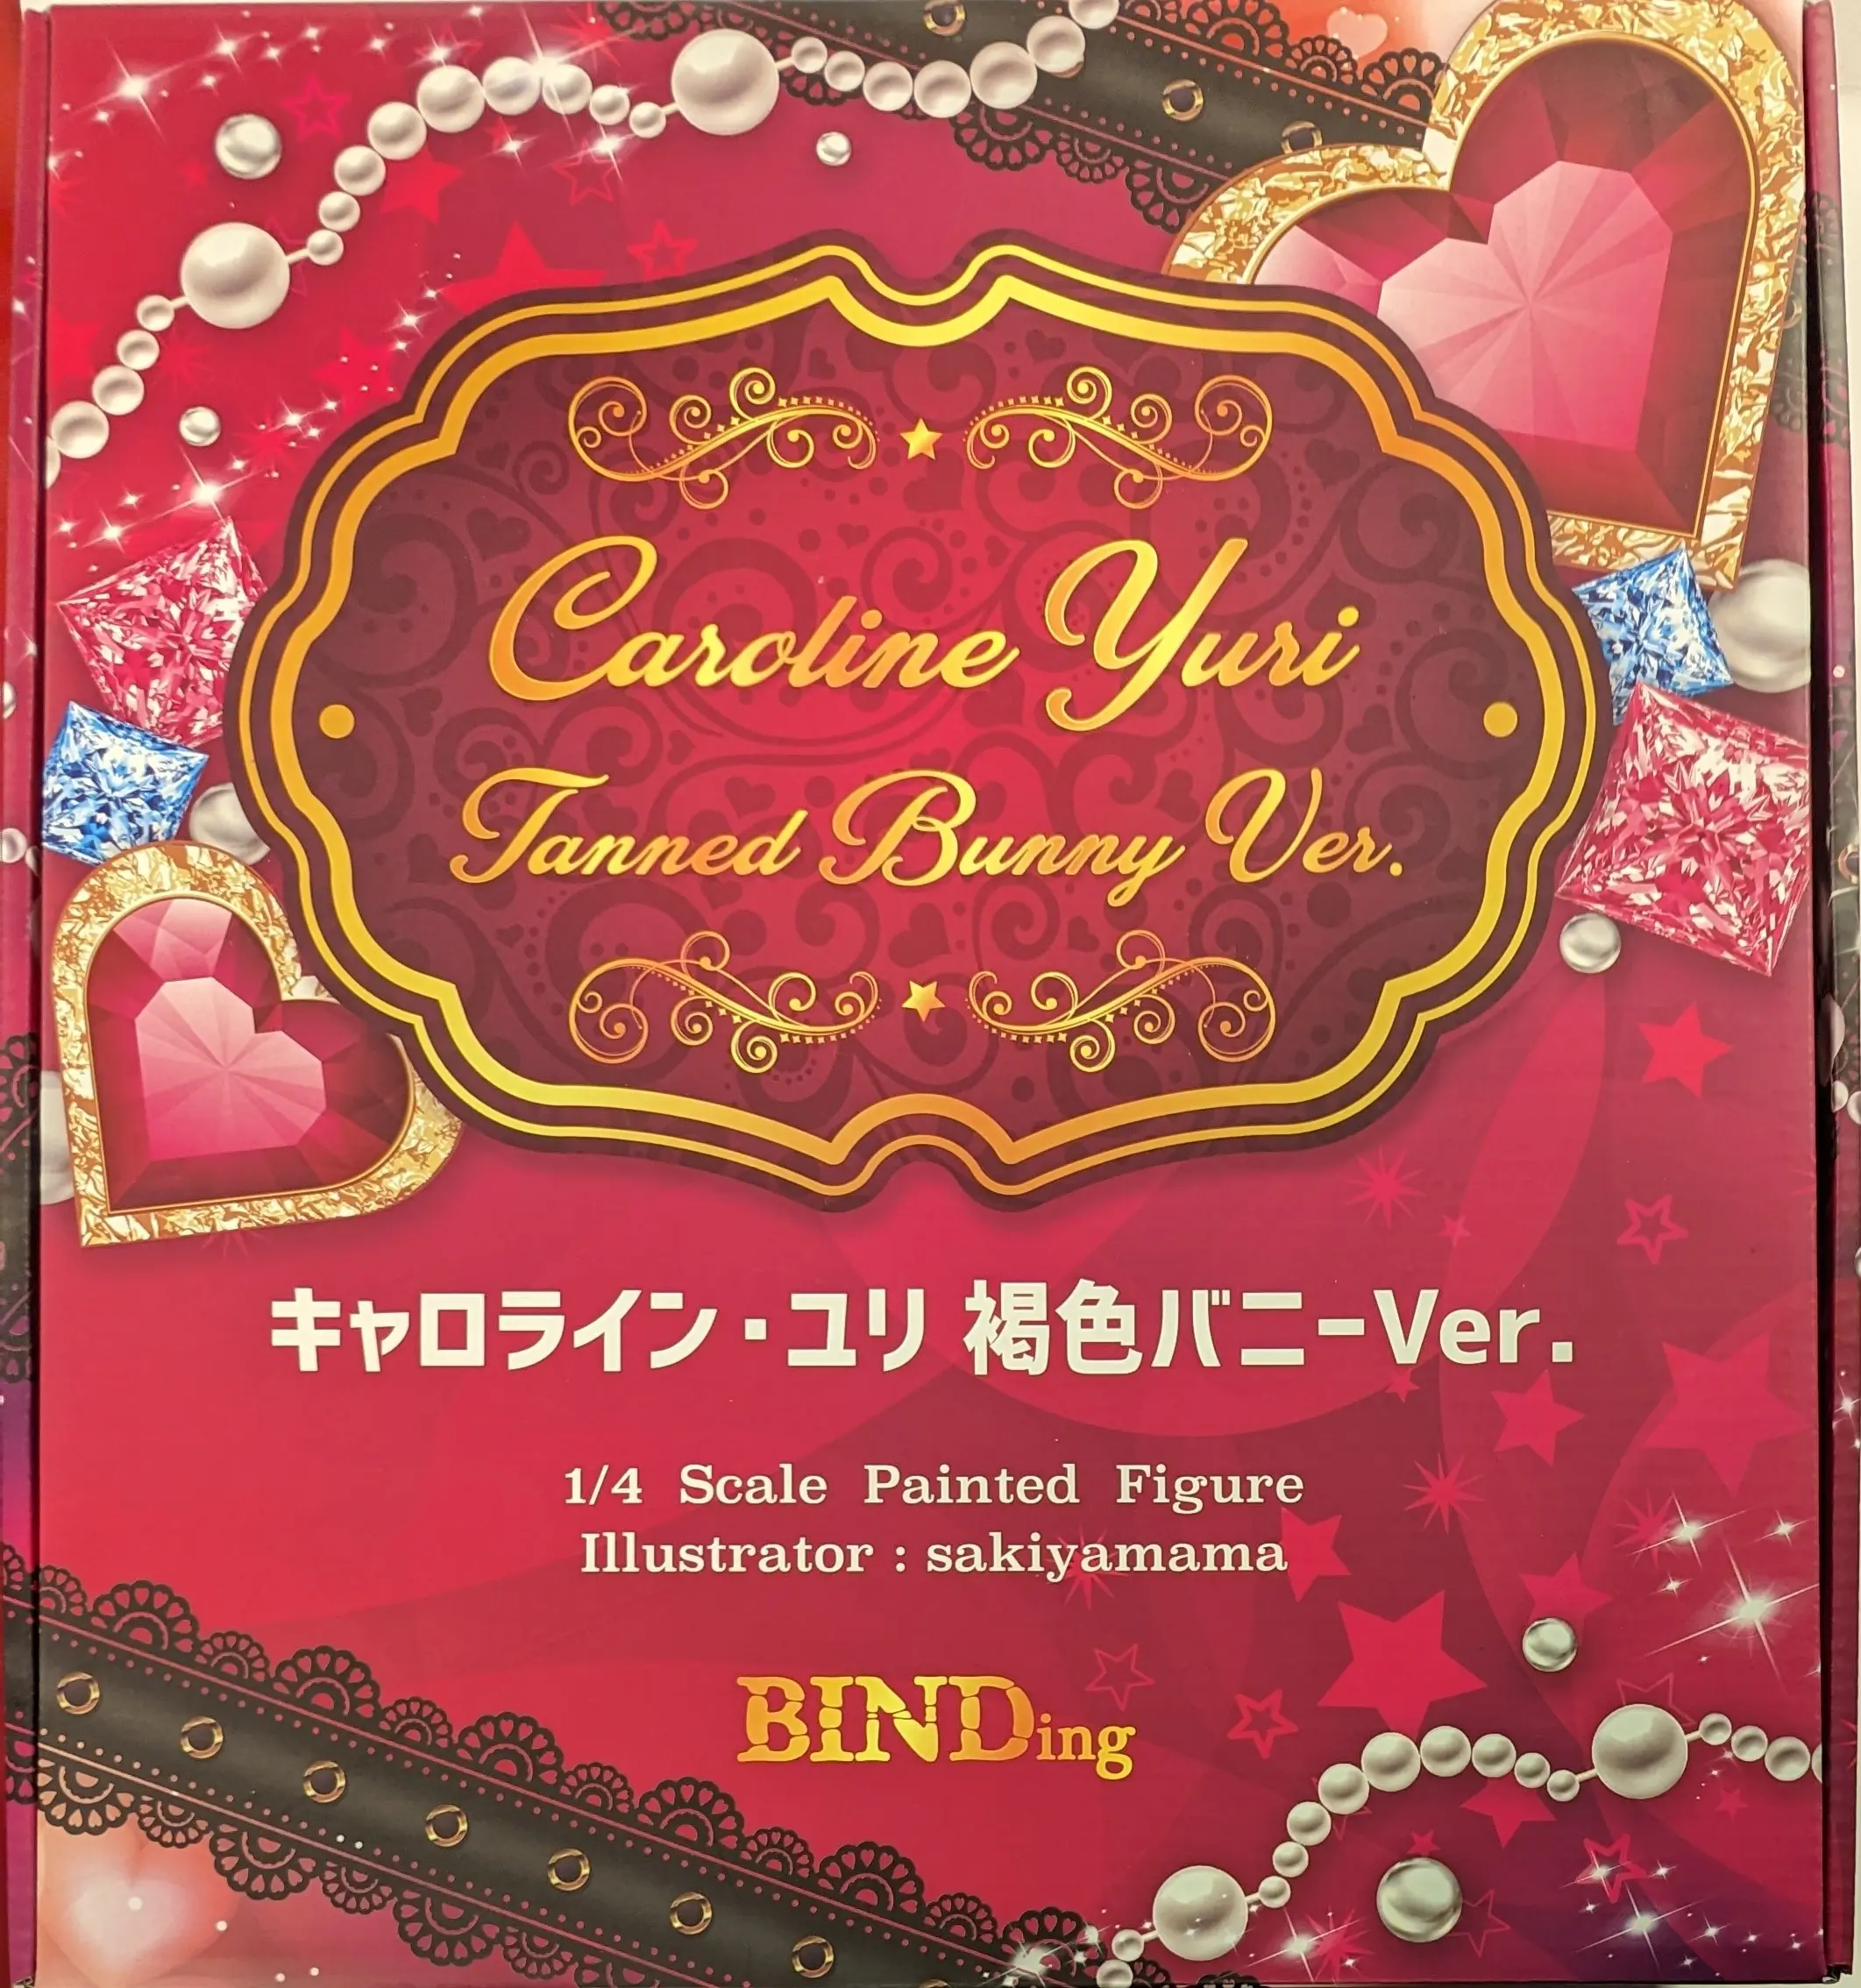 Binding Creator's Opinion - BINDing - Caroline Yuri - sakiyamama - Bunny Costume Figure